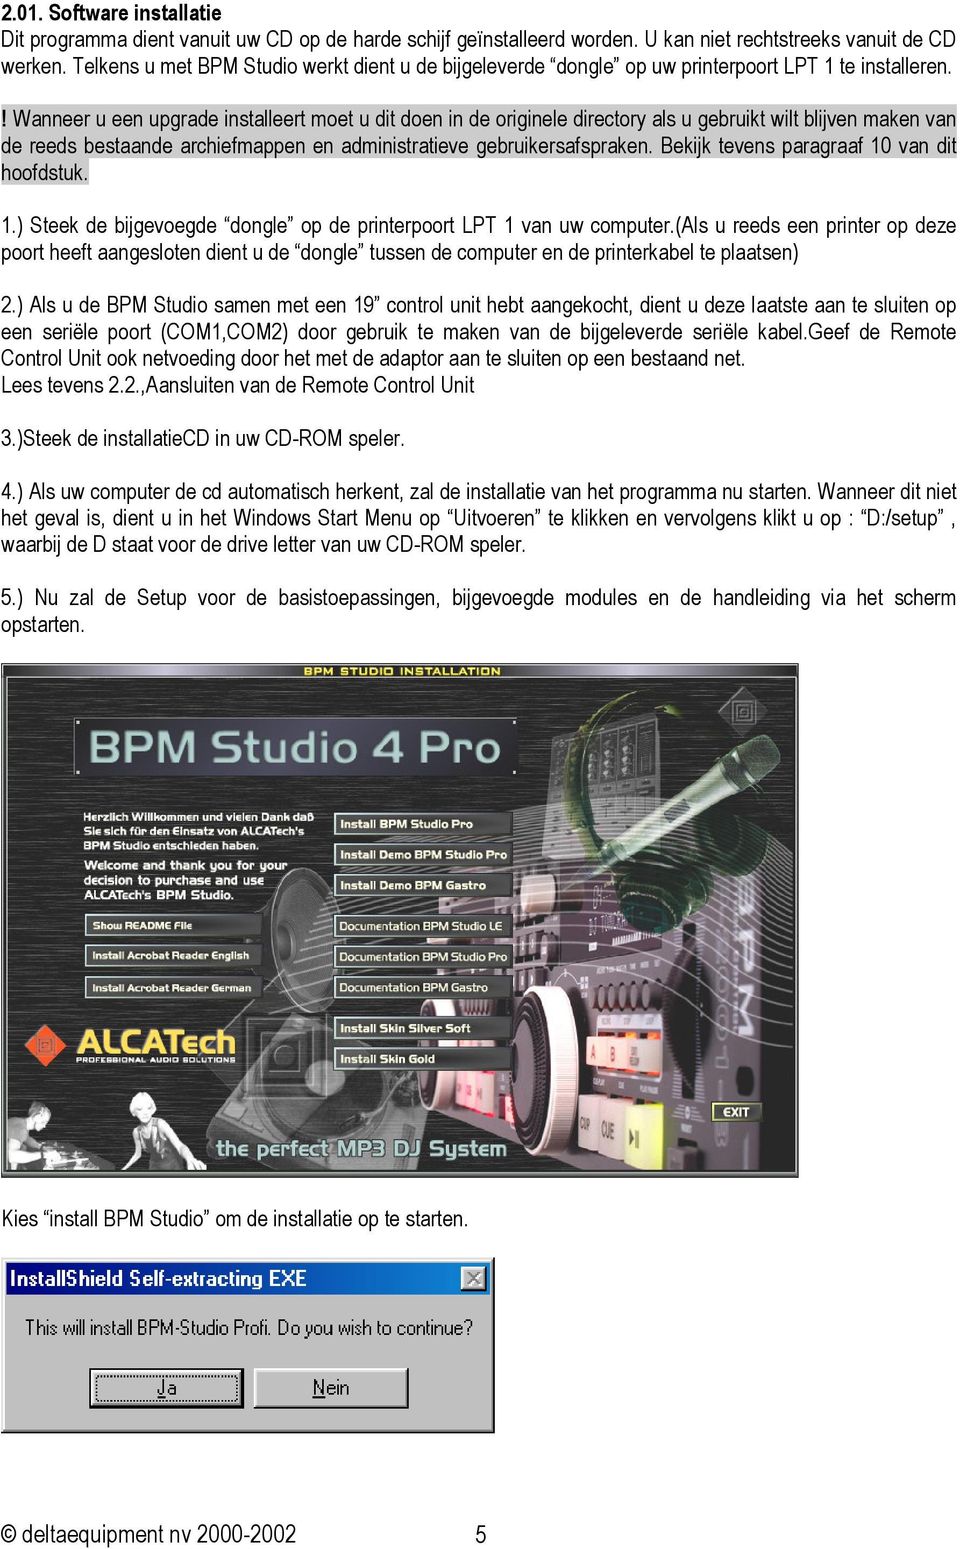 alcatech bpm studio rcp-2001